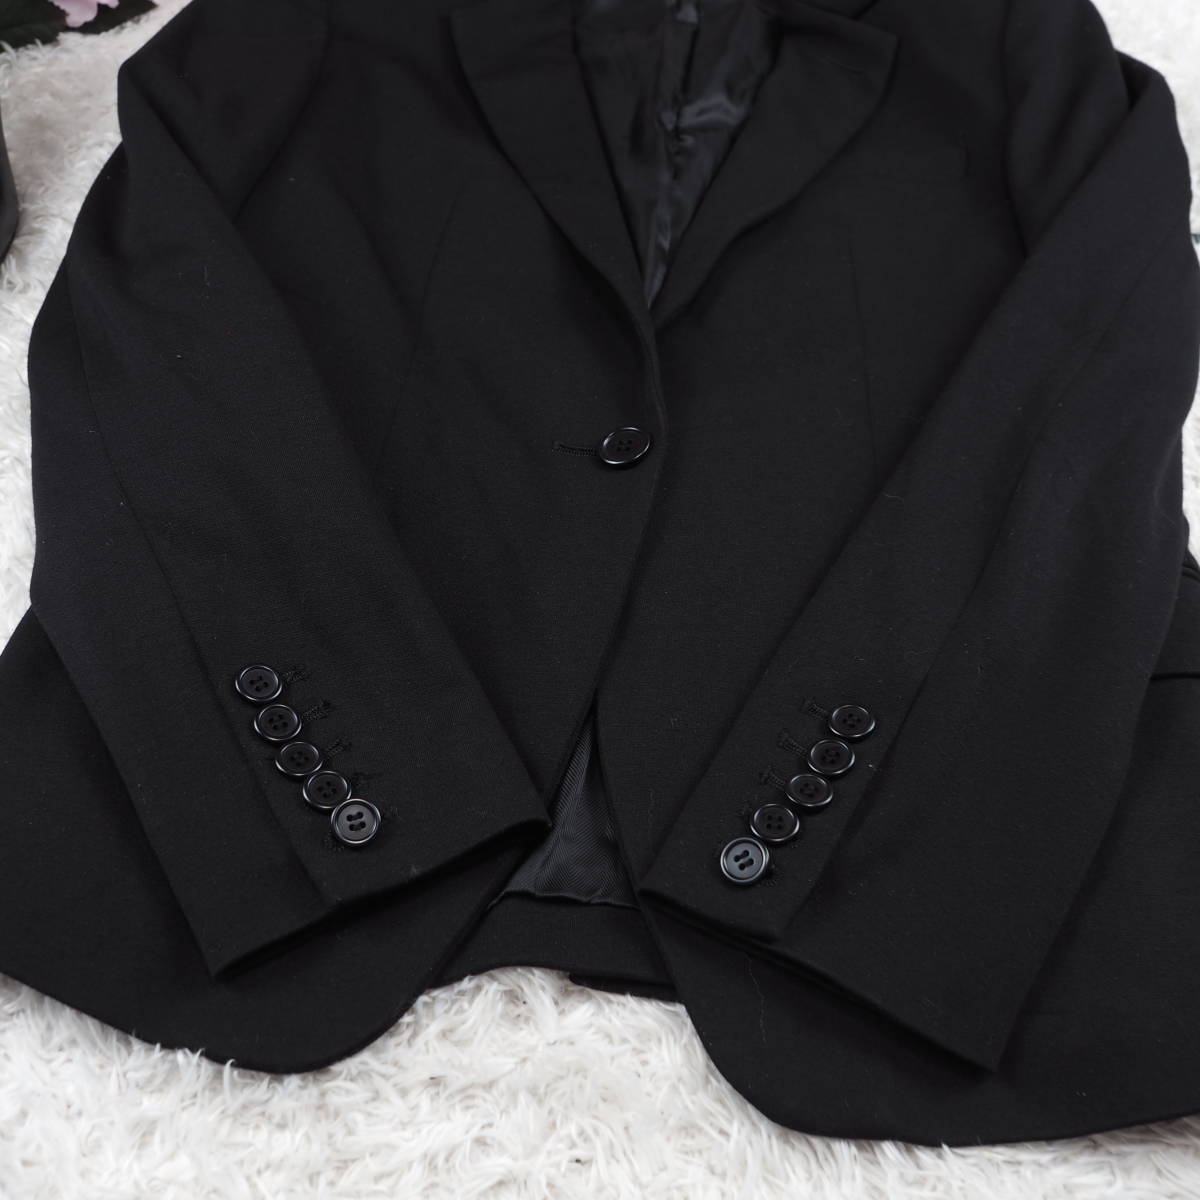 G2768*AZUL BASIC azur * total reverse side * single * tailored jacket * black black 